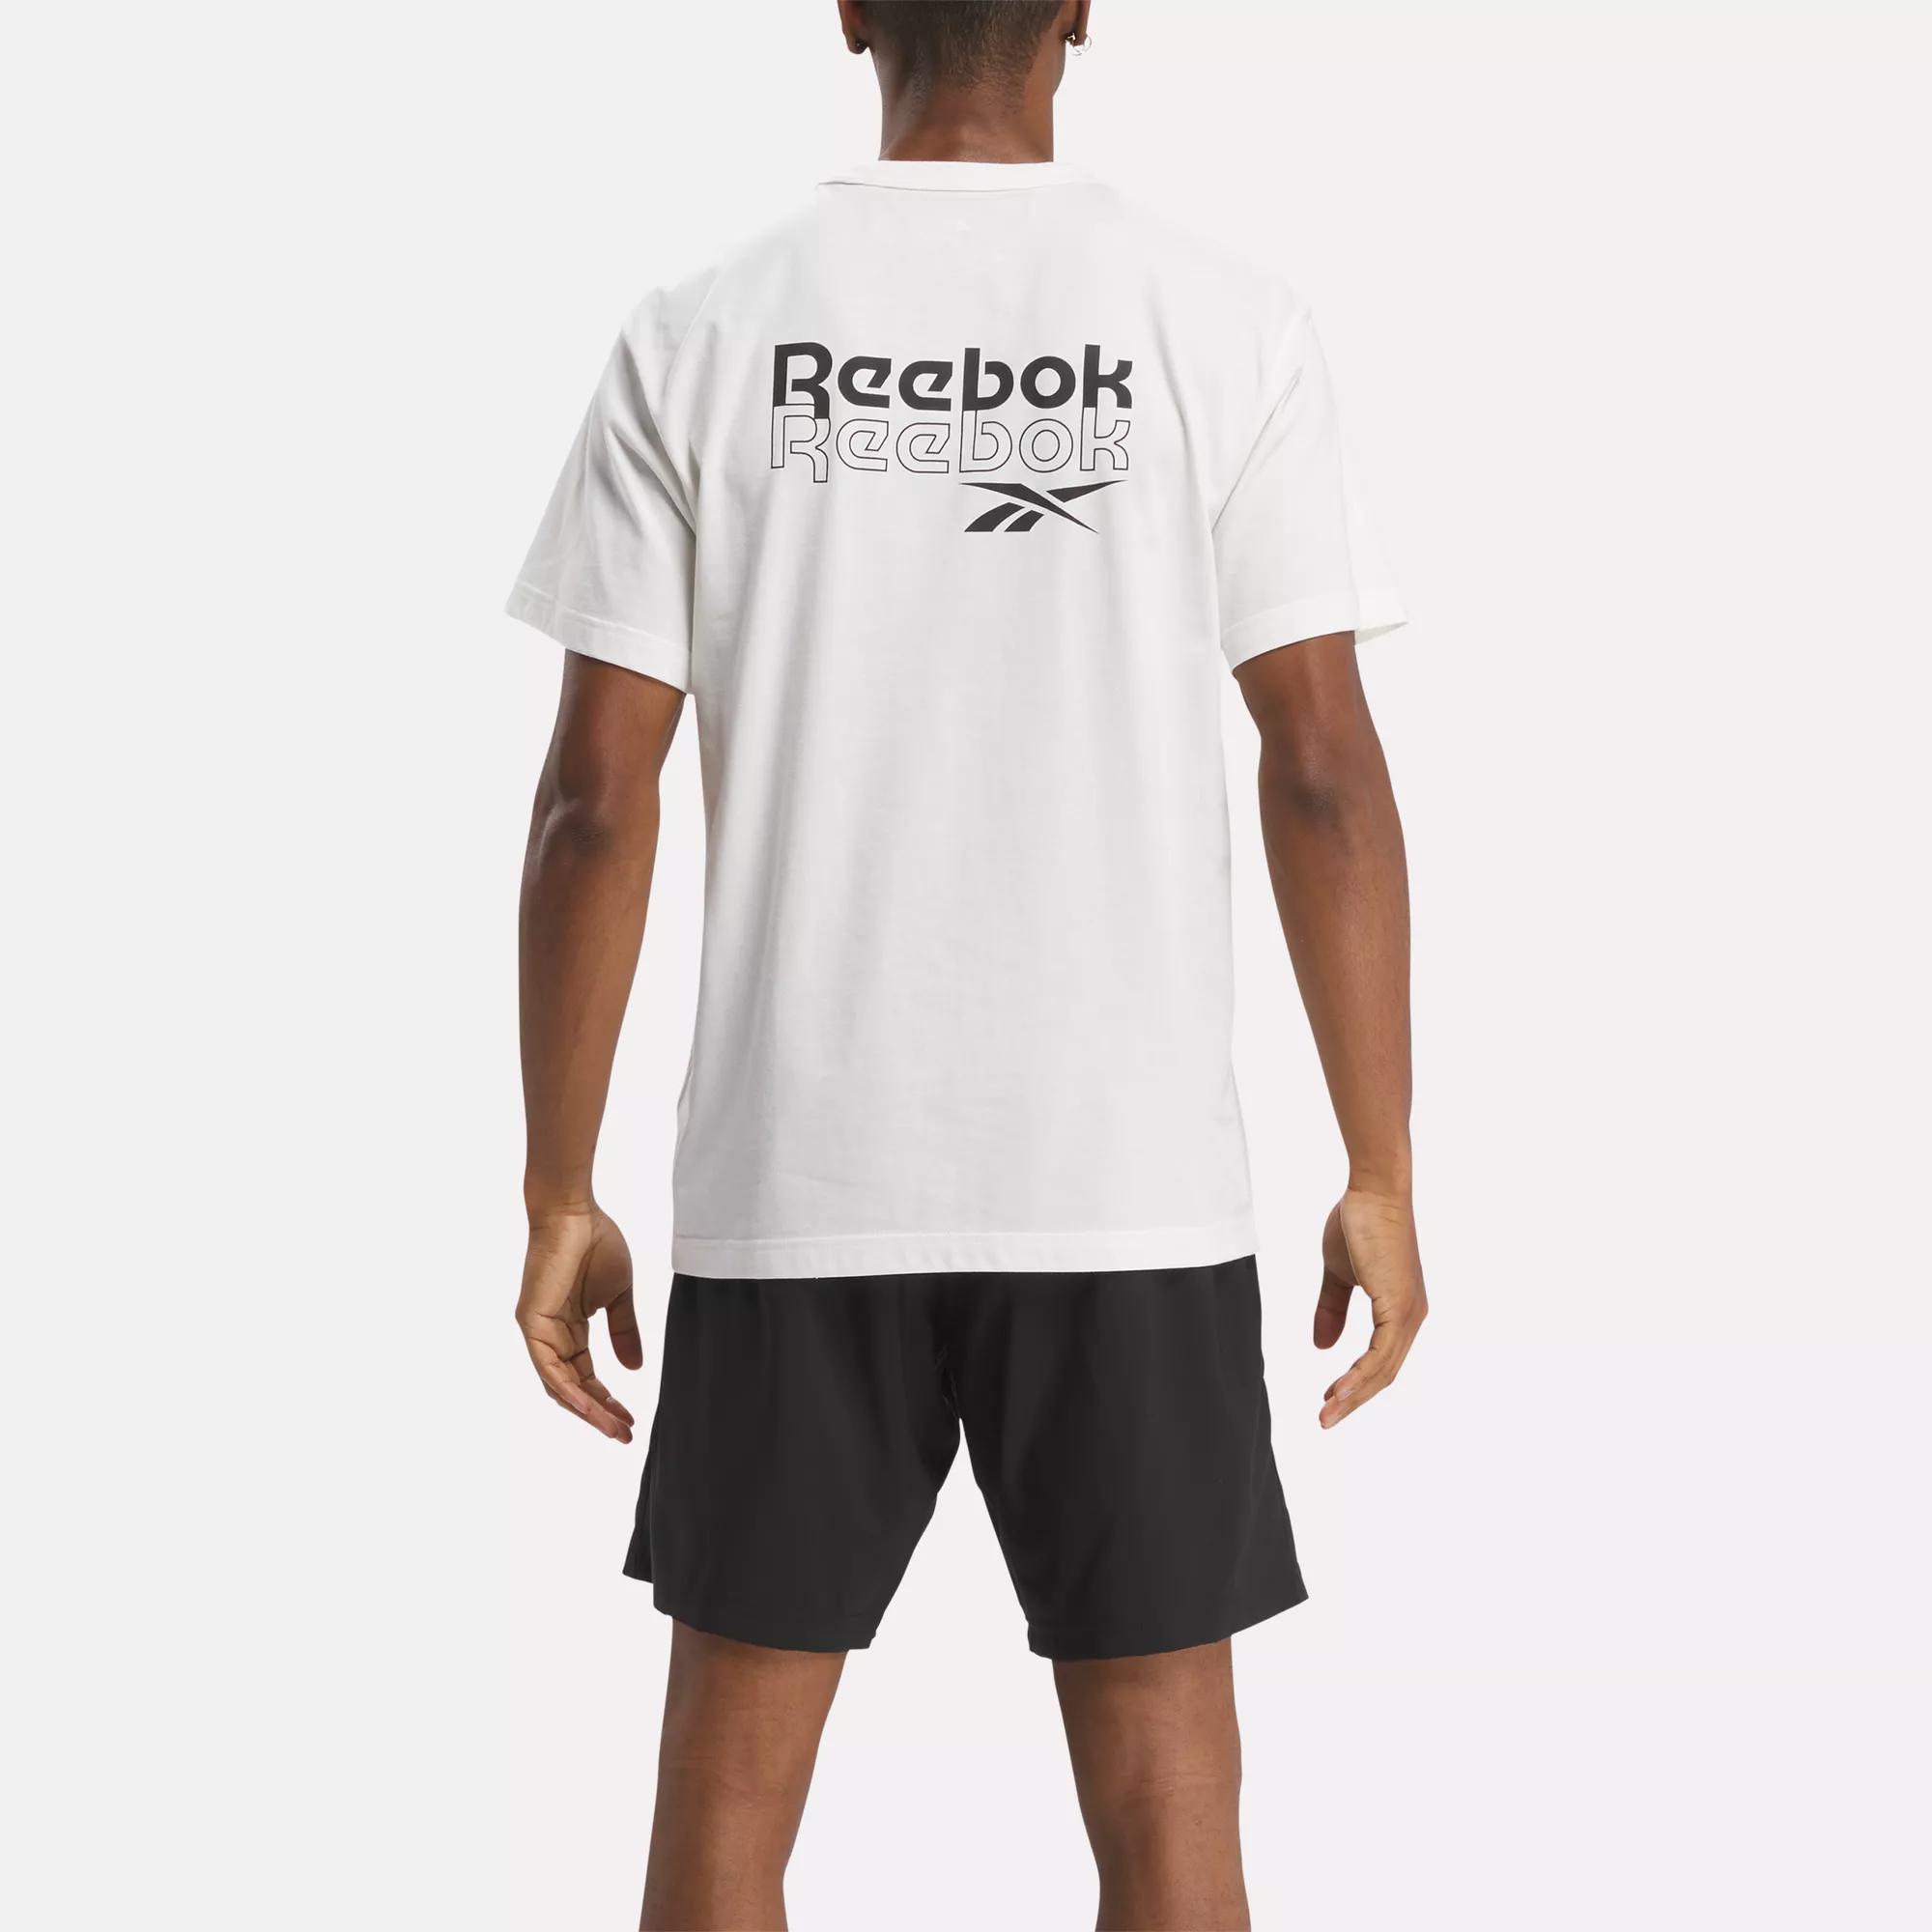 Reebok Identity Brand Proud Shorts in BLACK